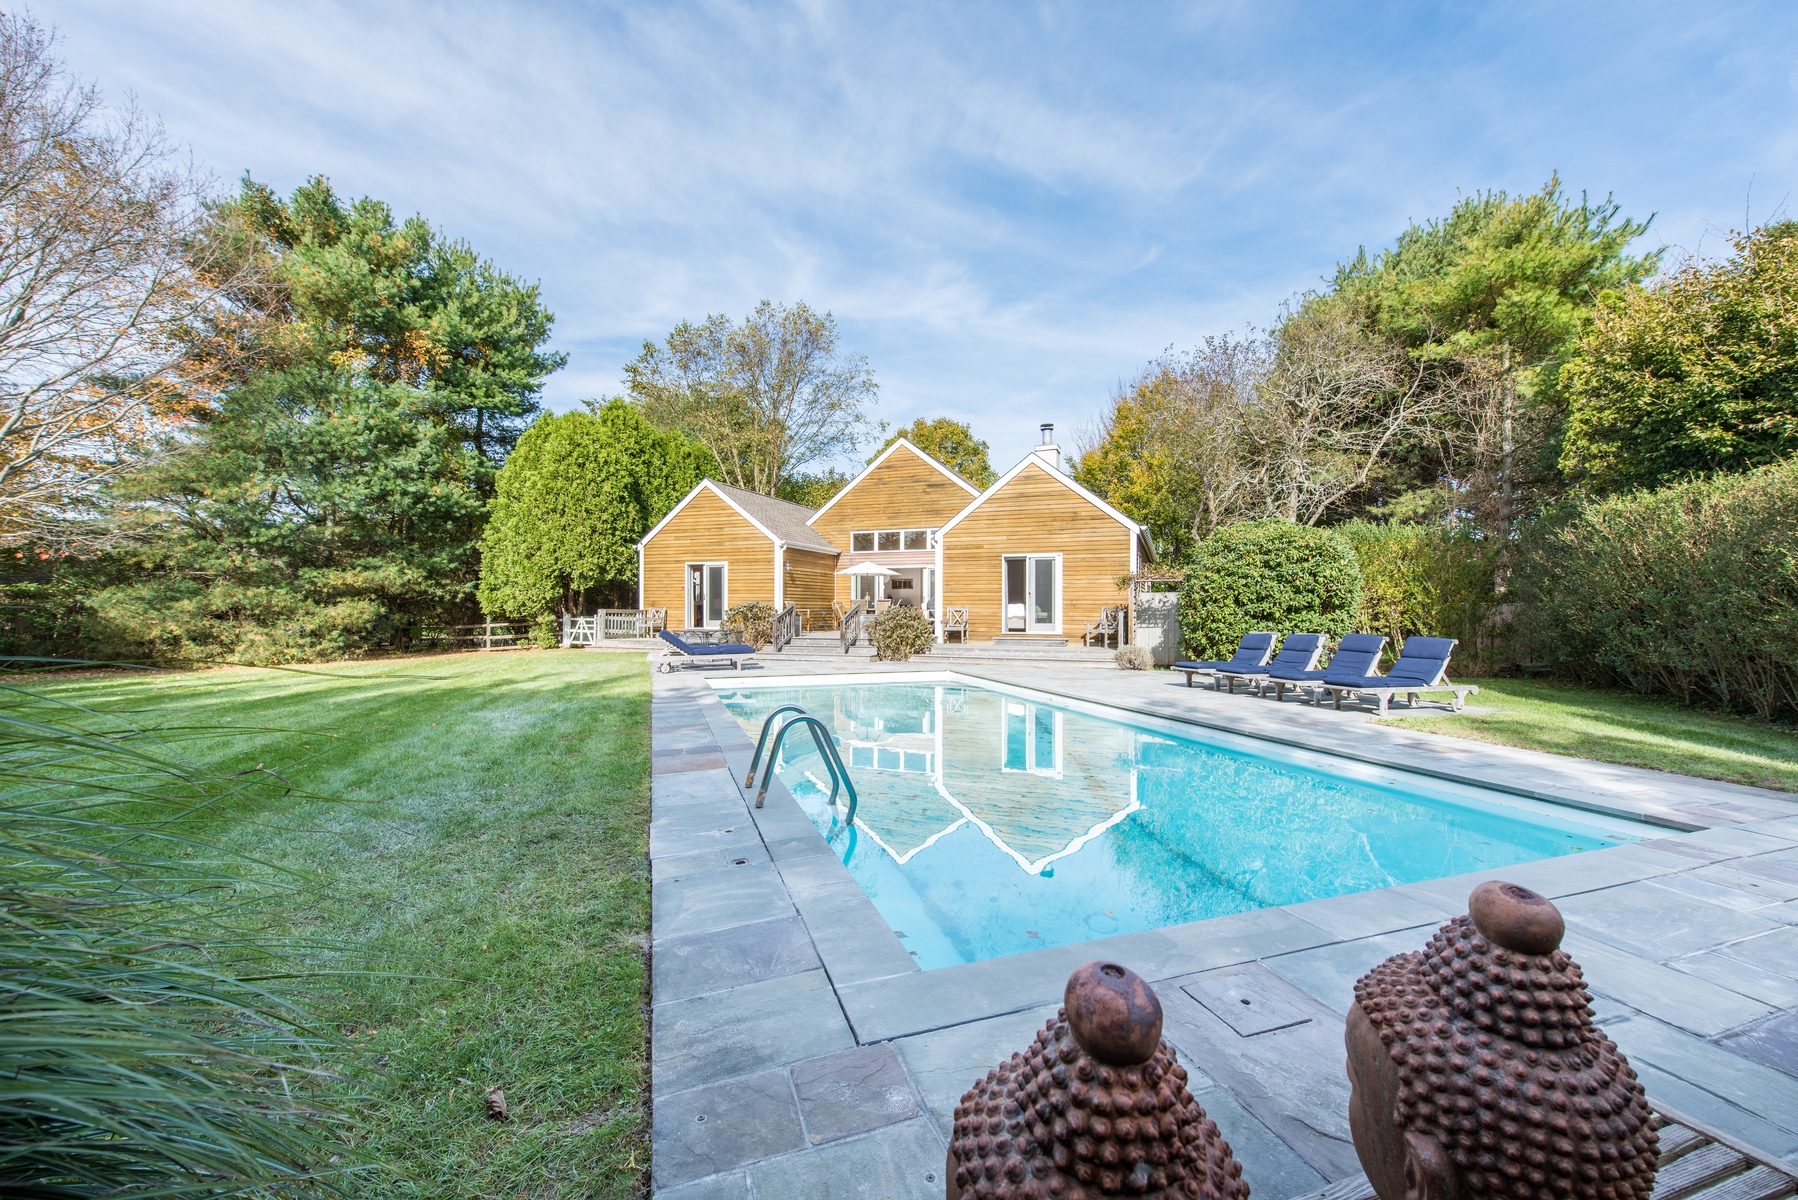 Rental Property at Bridgehampton, Bridgehampton, Hamptons, NY - Bedrooms: 3 
Bathrooms: 2  - $50,000 MO.